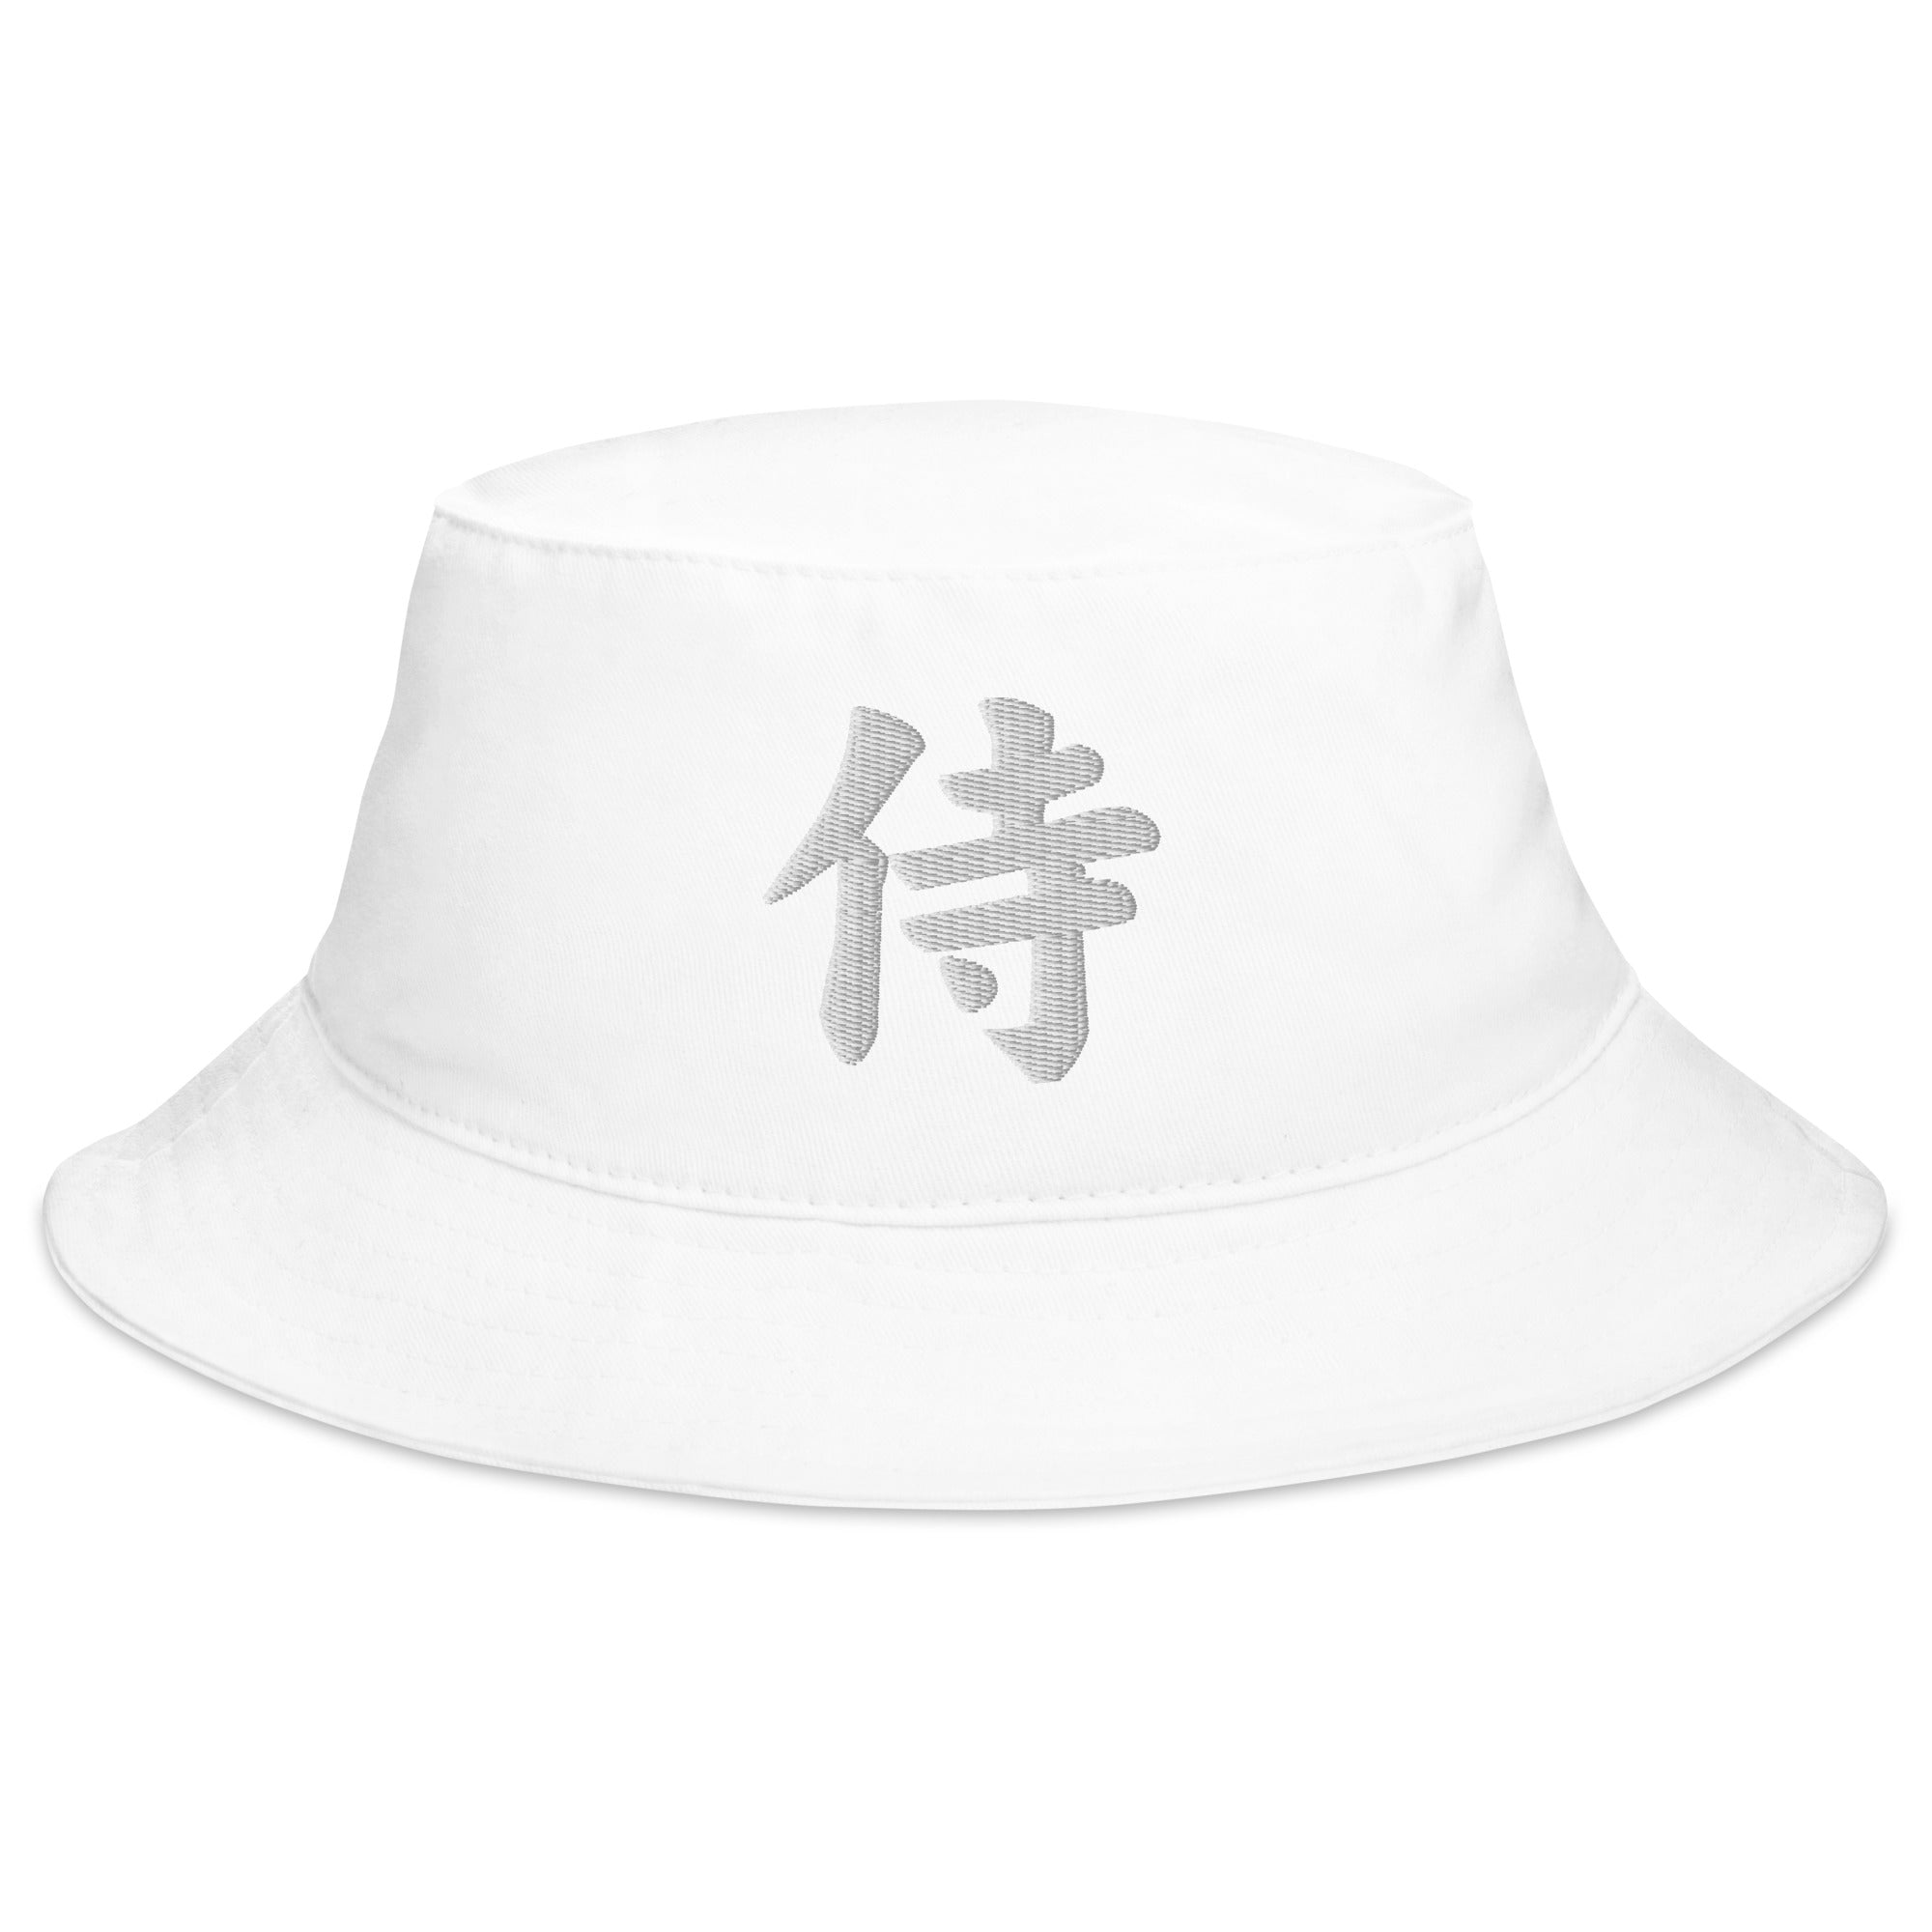 White Samurai The Japanese Kanji Symbol Embroidered Bucket Hat